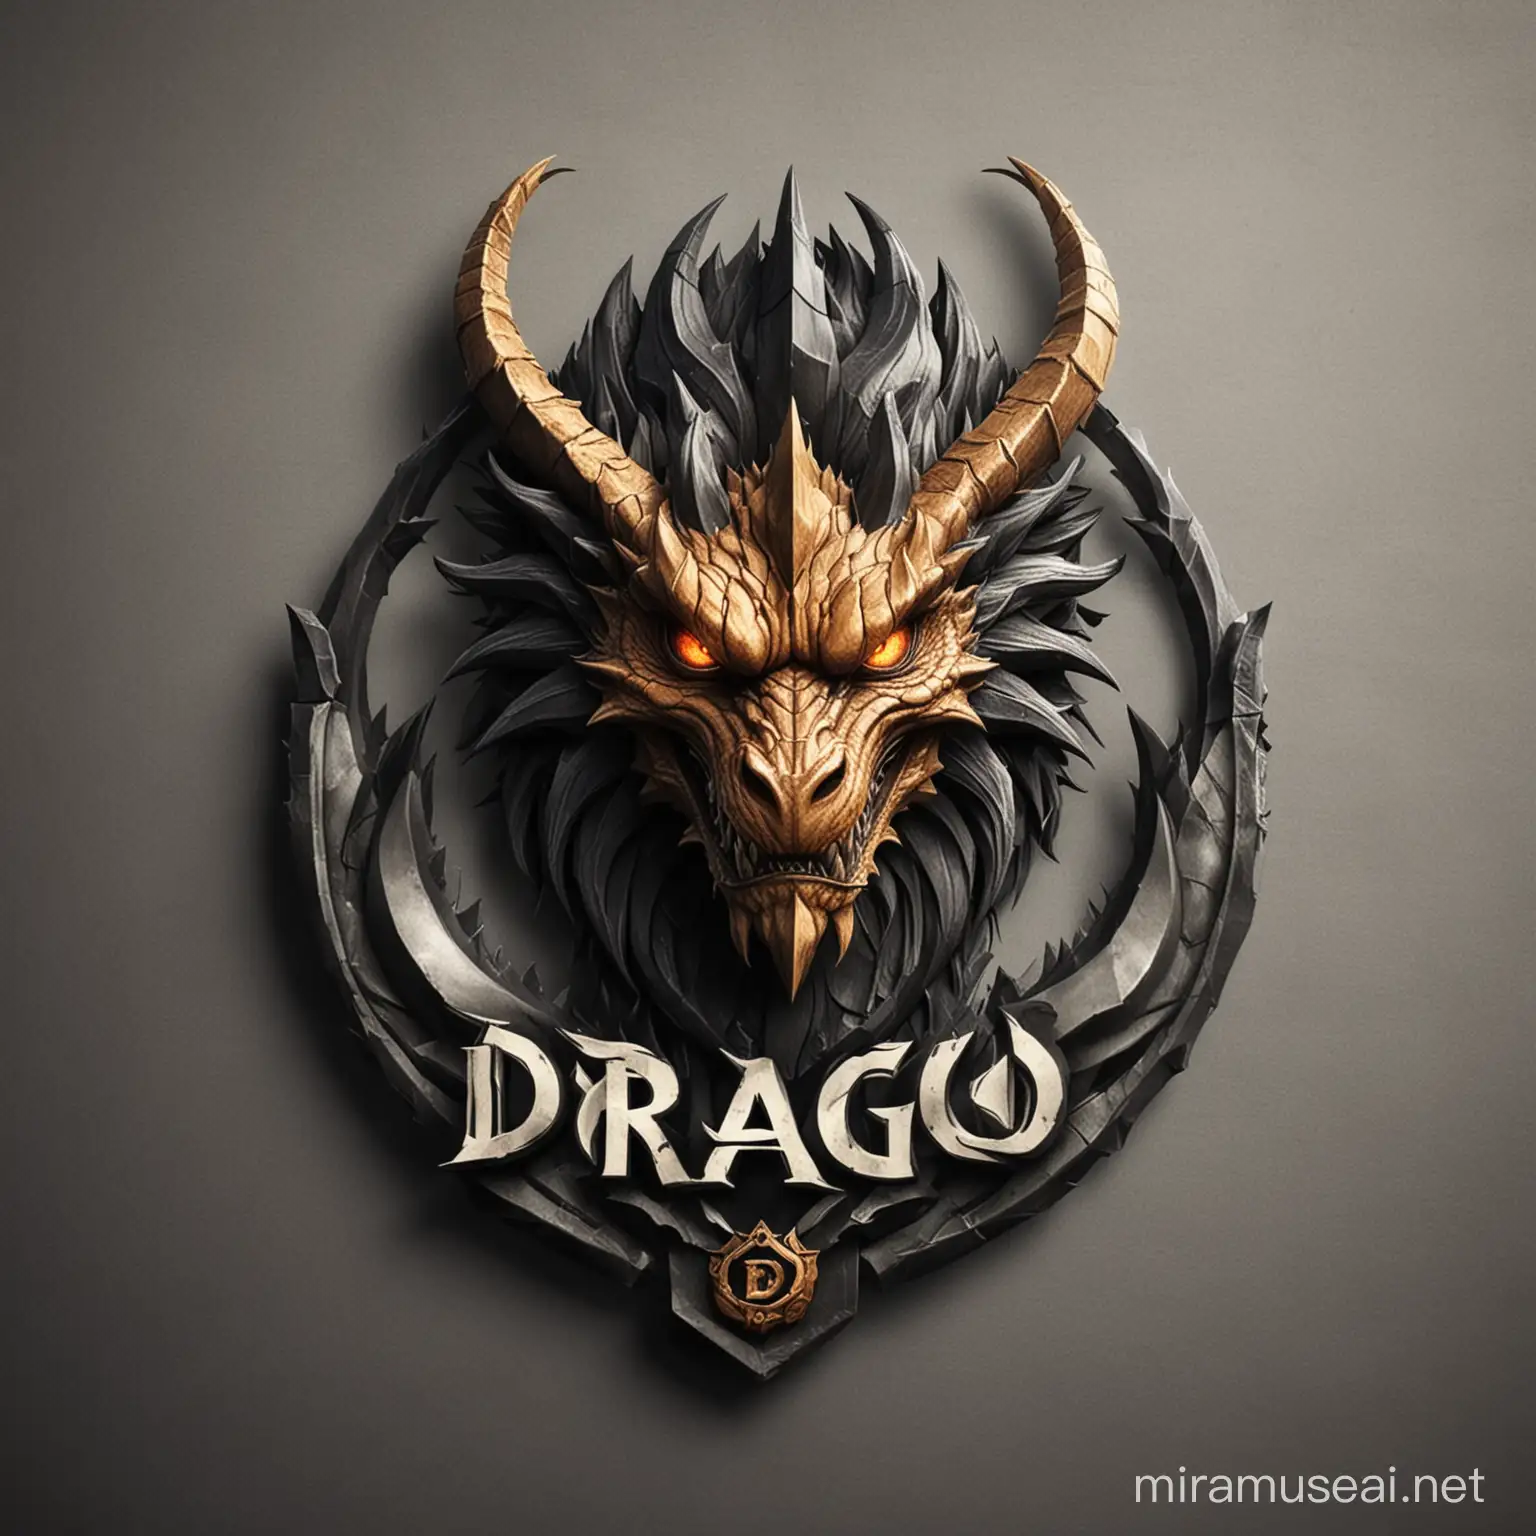 Majestic DRAGO Logo Design Featuring a Dragon Face